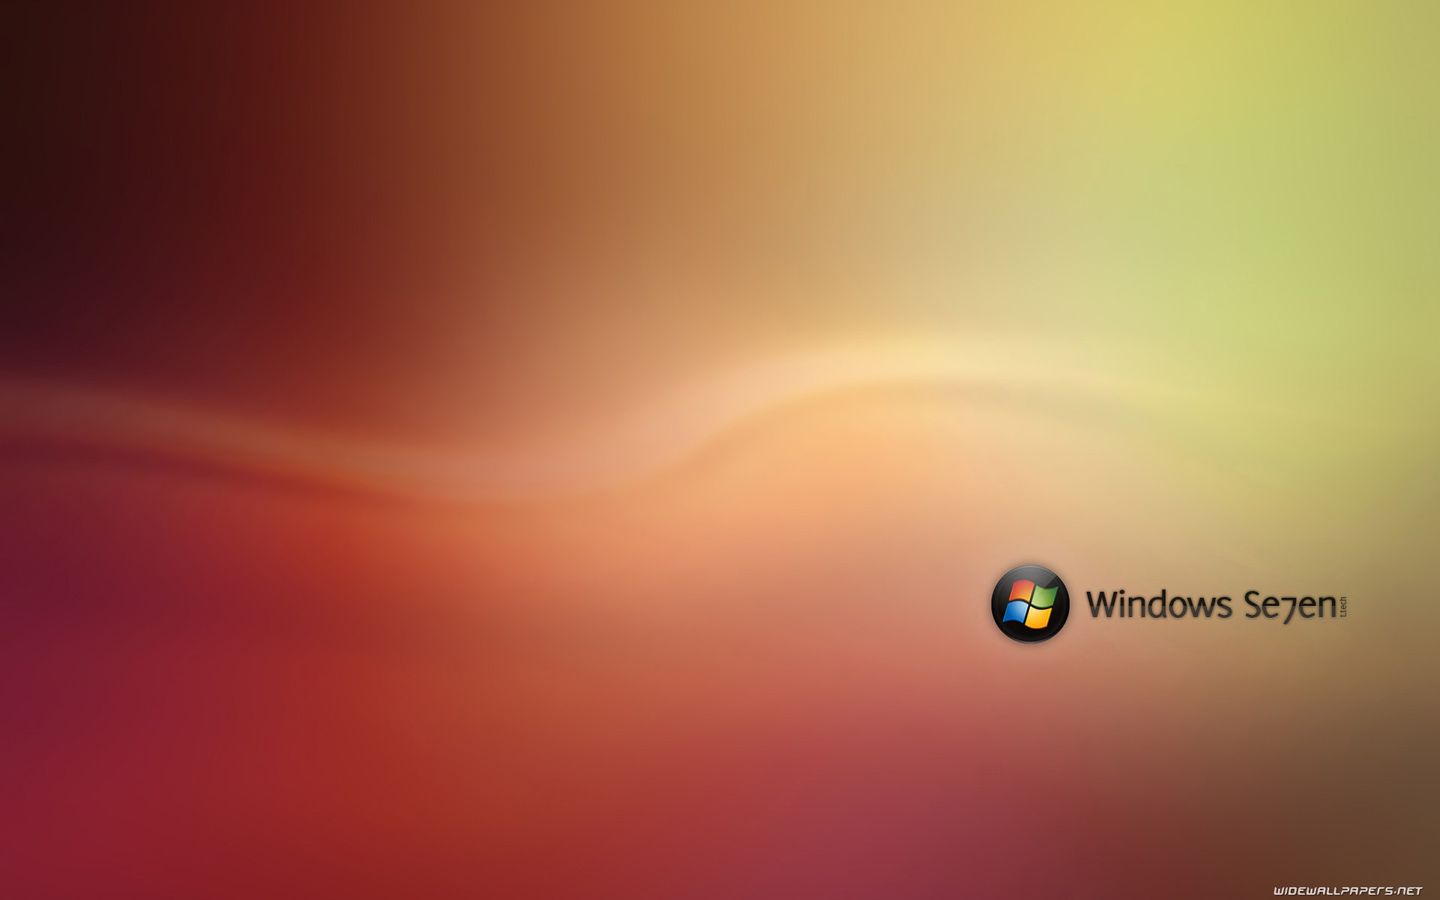 Windows 7 desktop wallpapers HD and wide wallpapers